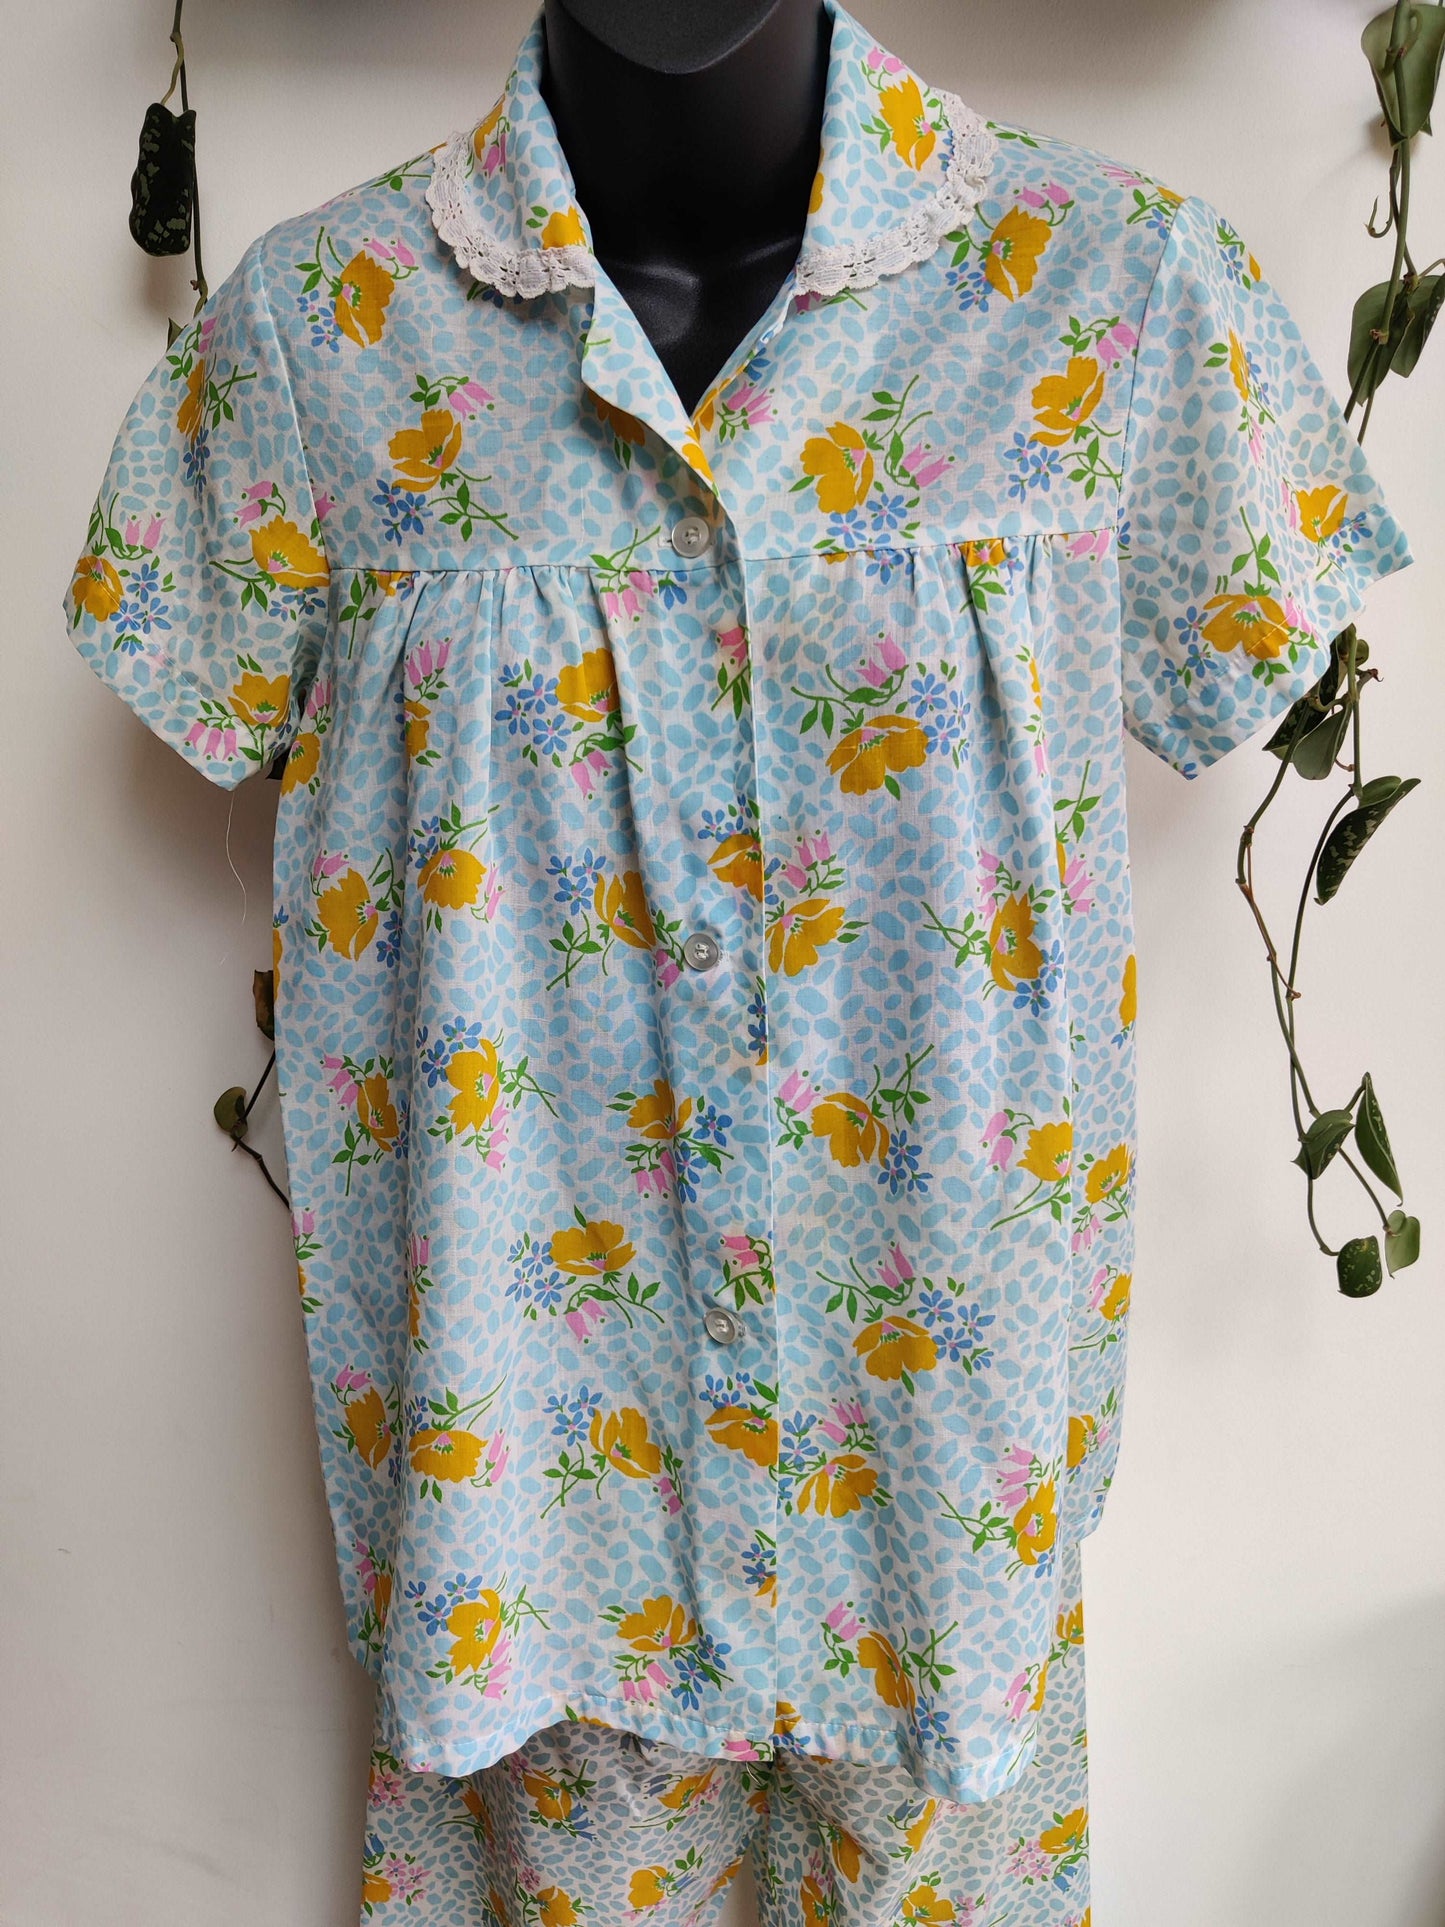 Stunning vintage floral pajamas